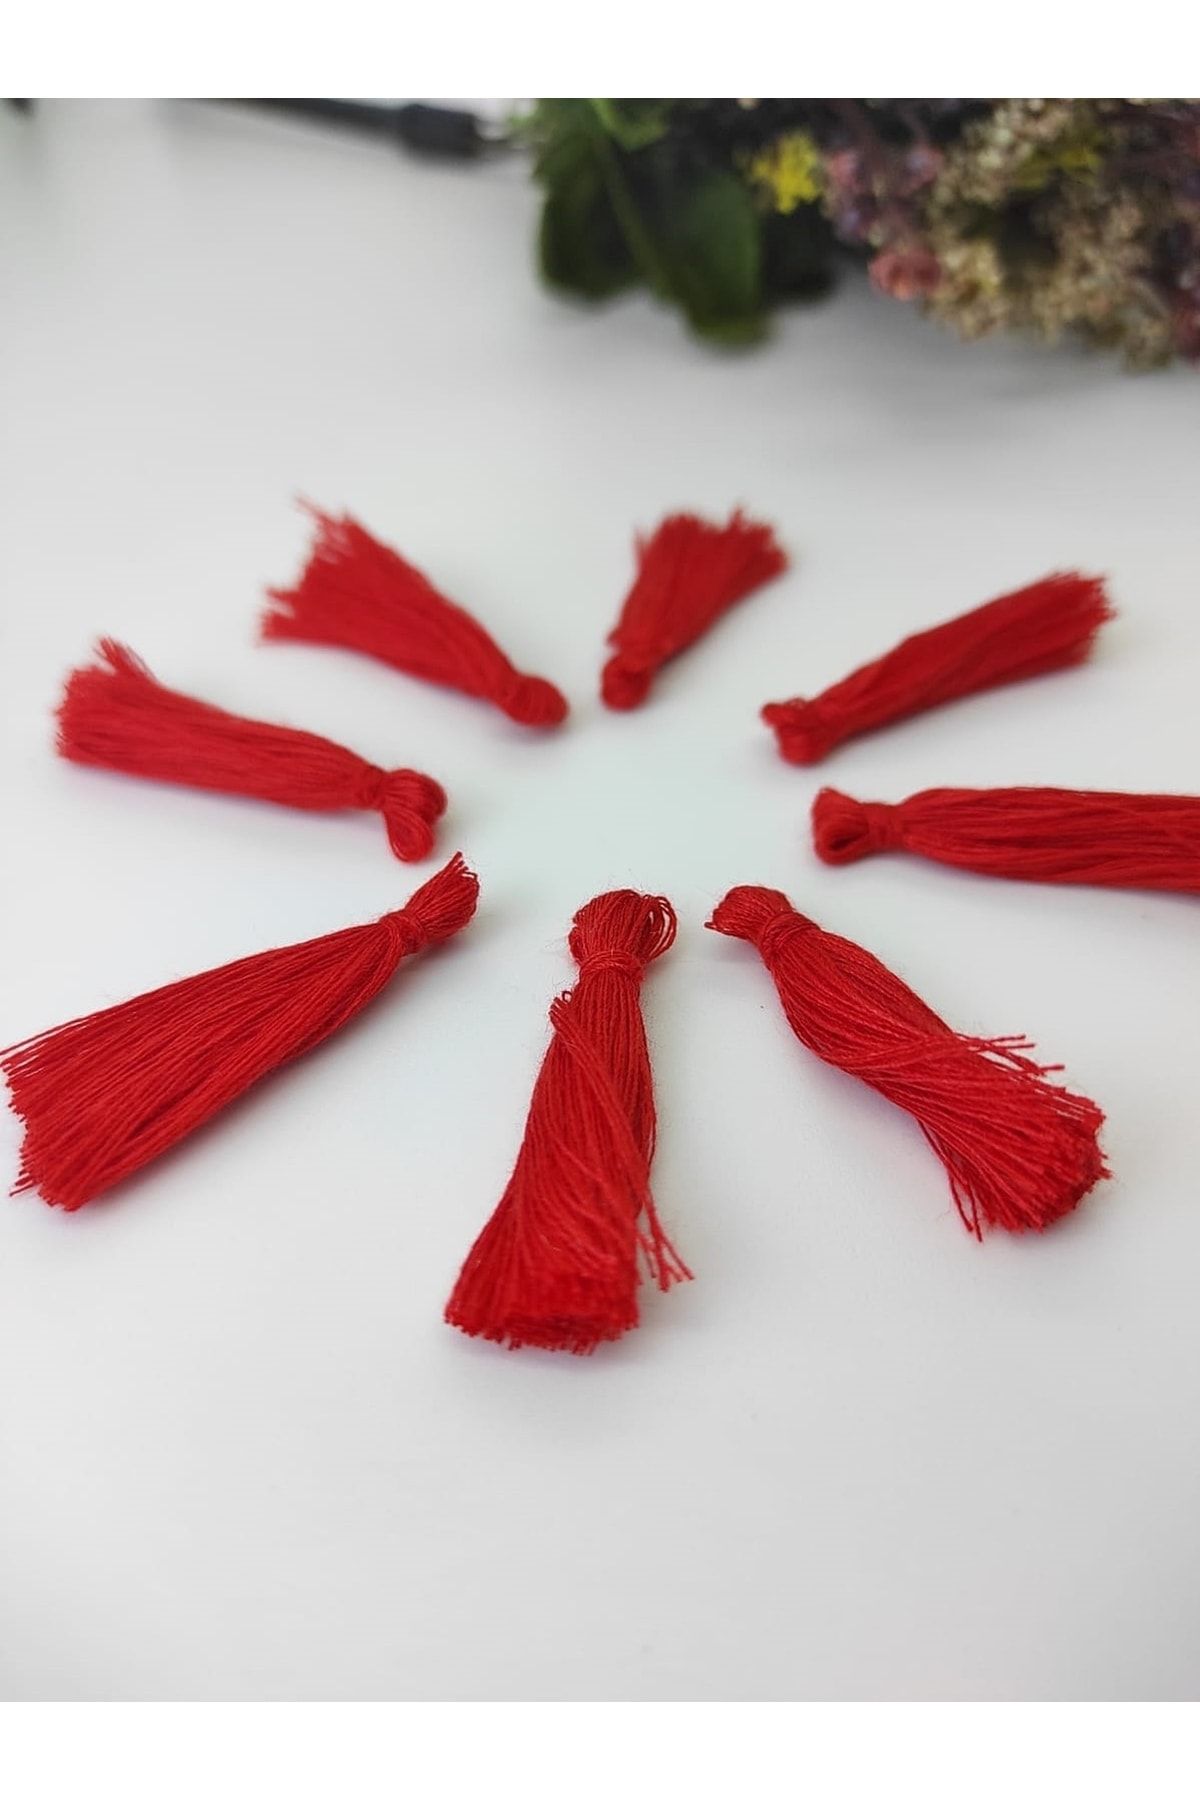 Hobigram Kırmızı Pamuk Püskül 10 Adet 3 cm